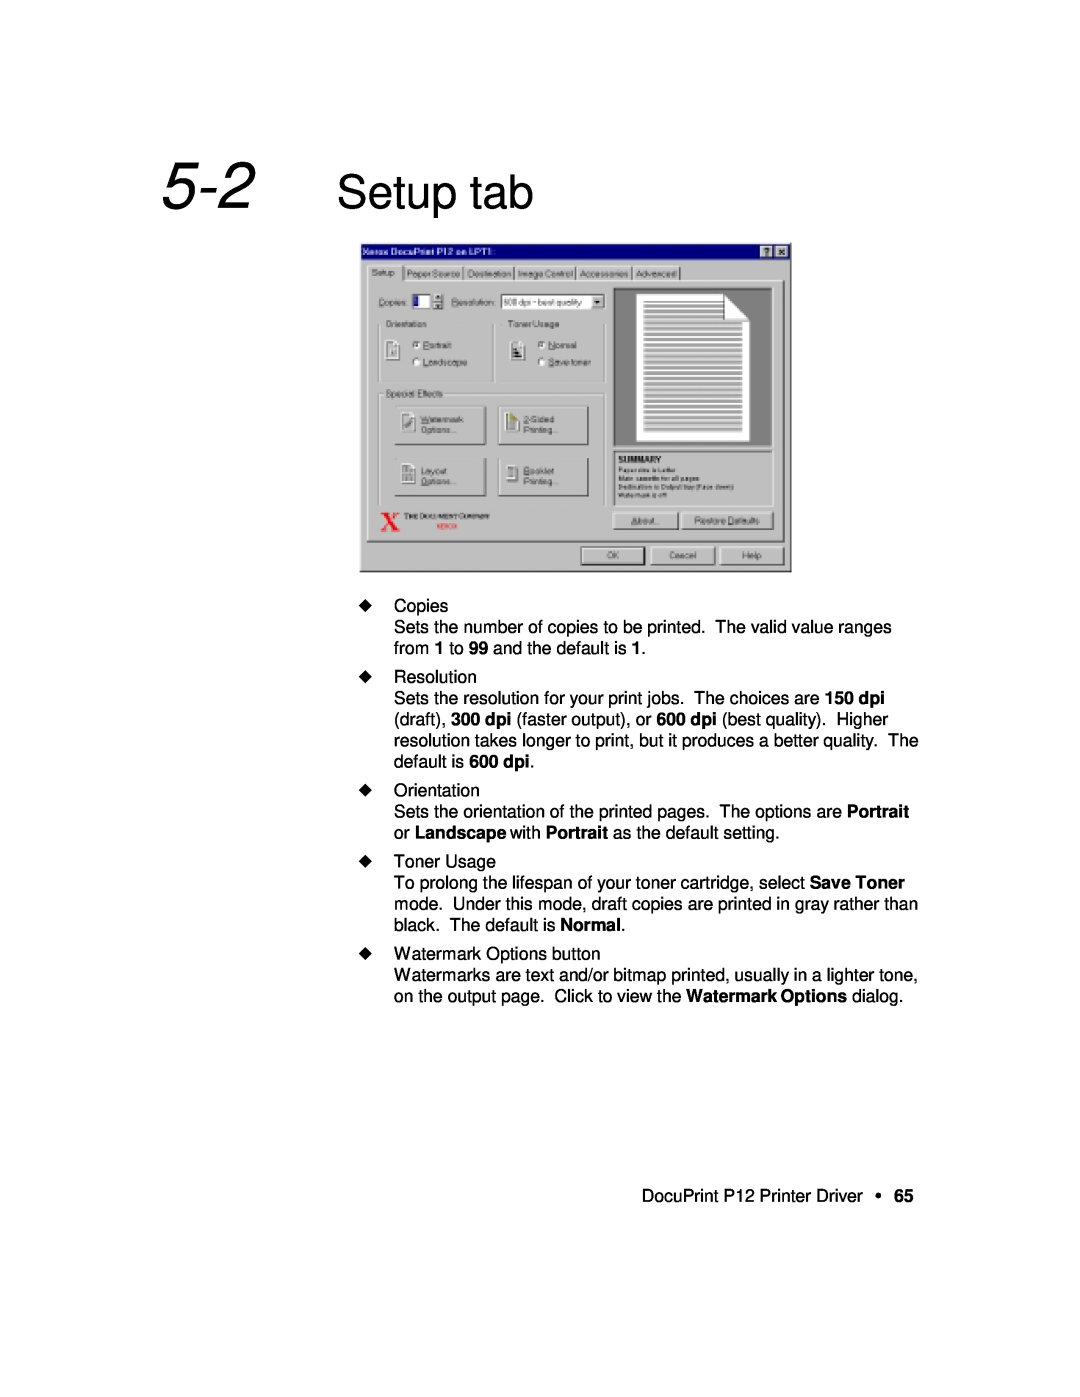 Xerox P12 manual Setup tab 